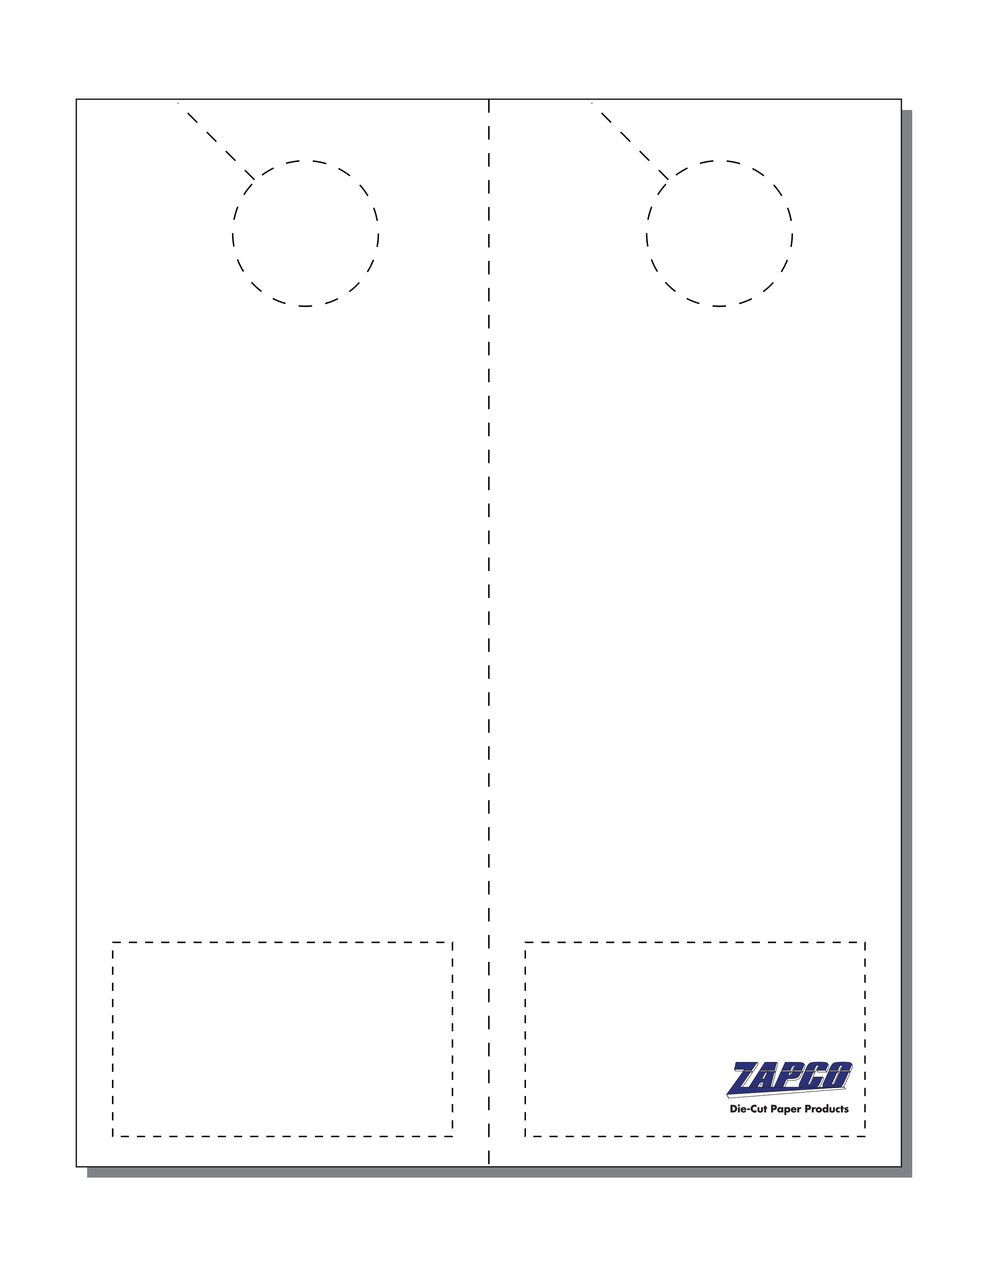 Item 226: 2-Up 4 1/4" x 11" Door Hanger with Business Card 8 1/2" x 11" Sheet